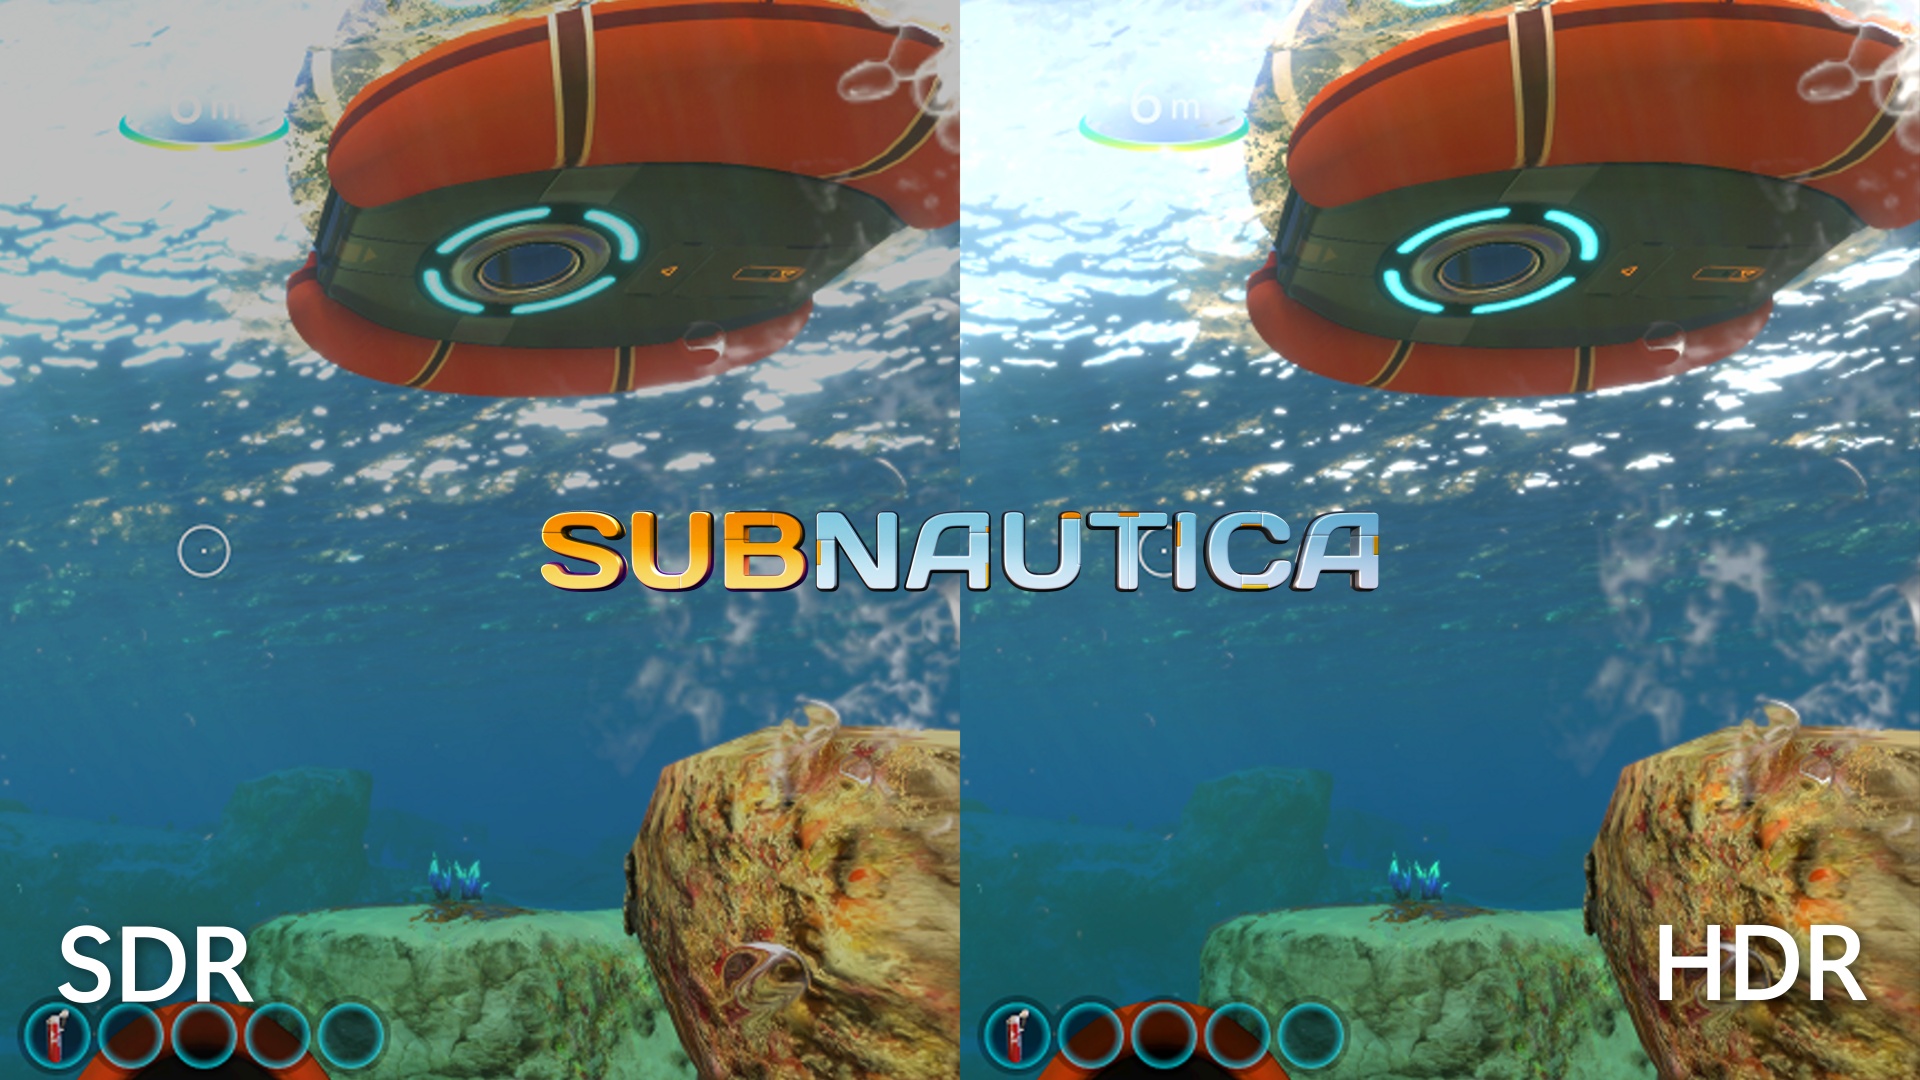 Subnautica HDR comparison screenshot